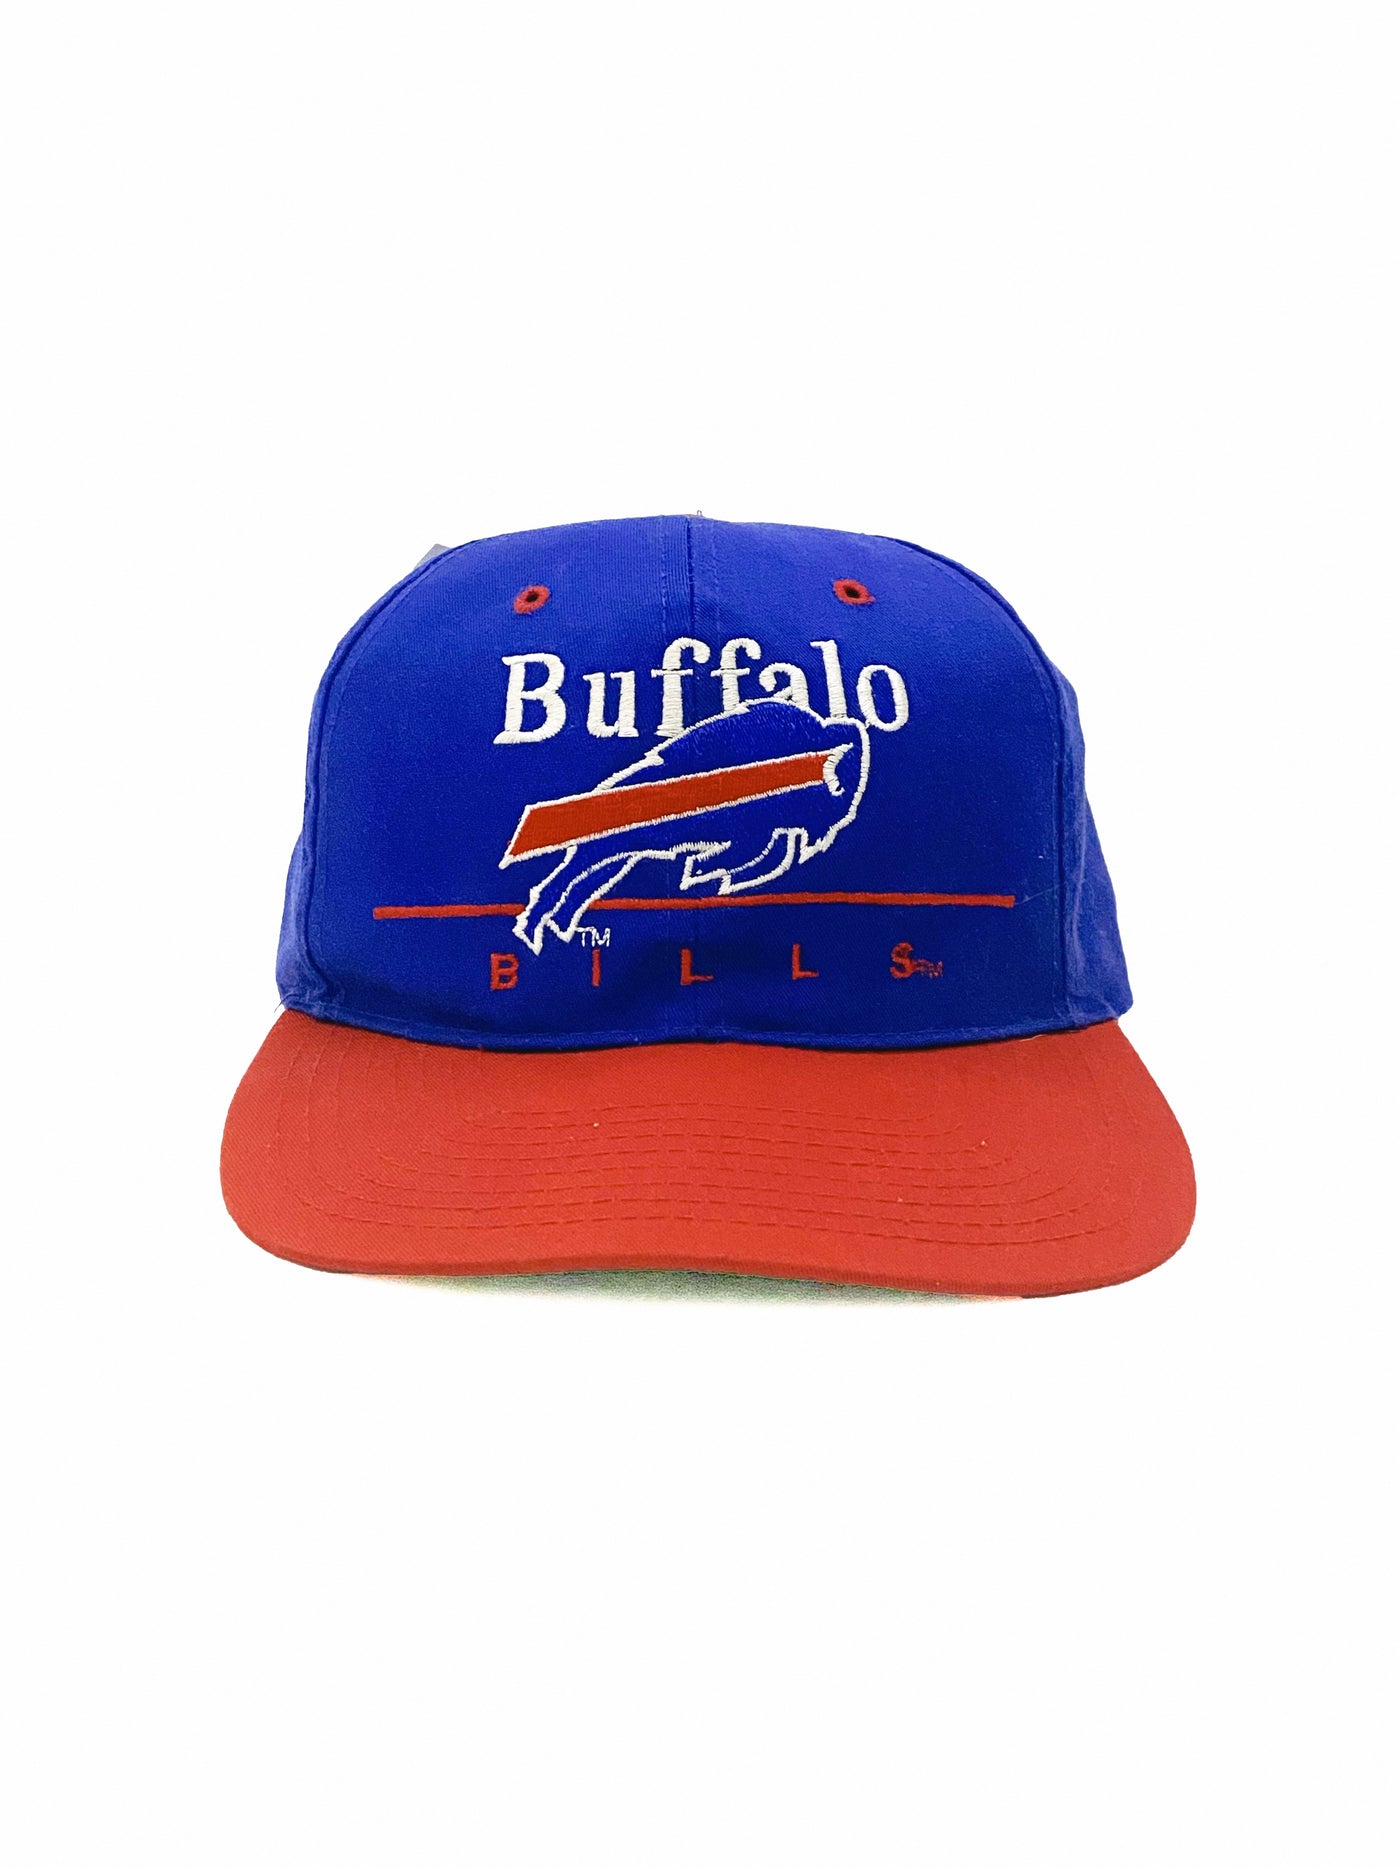 Vintage 90s Buffalo Bills Snapback